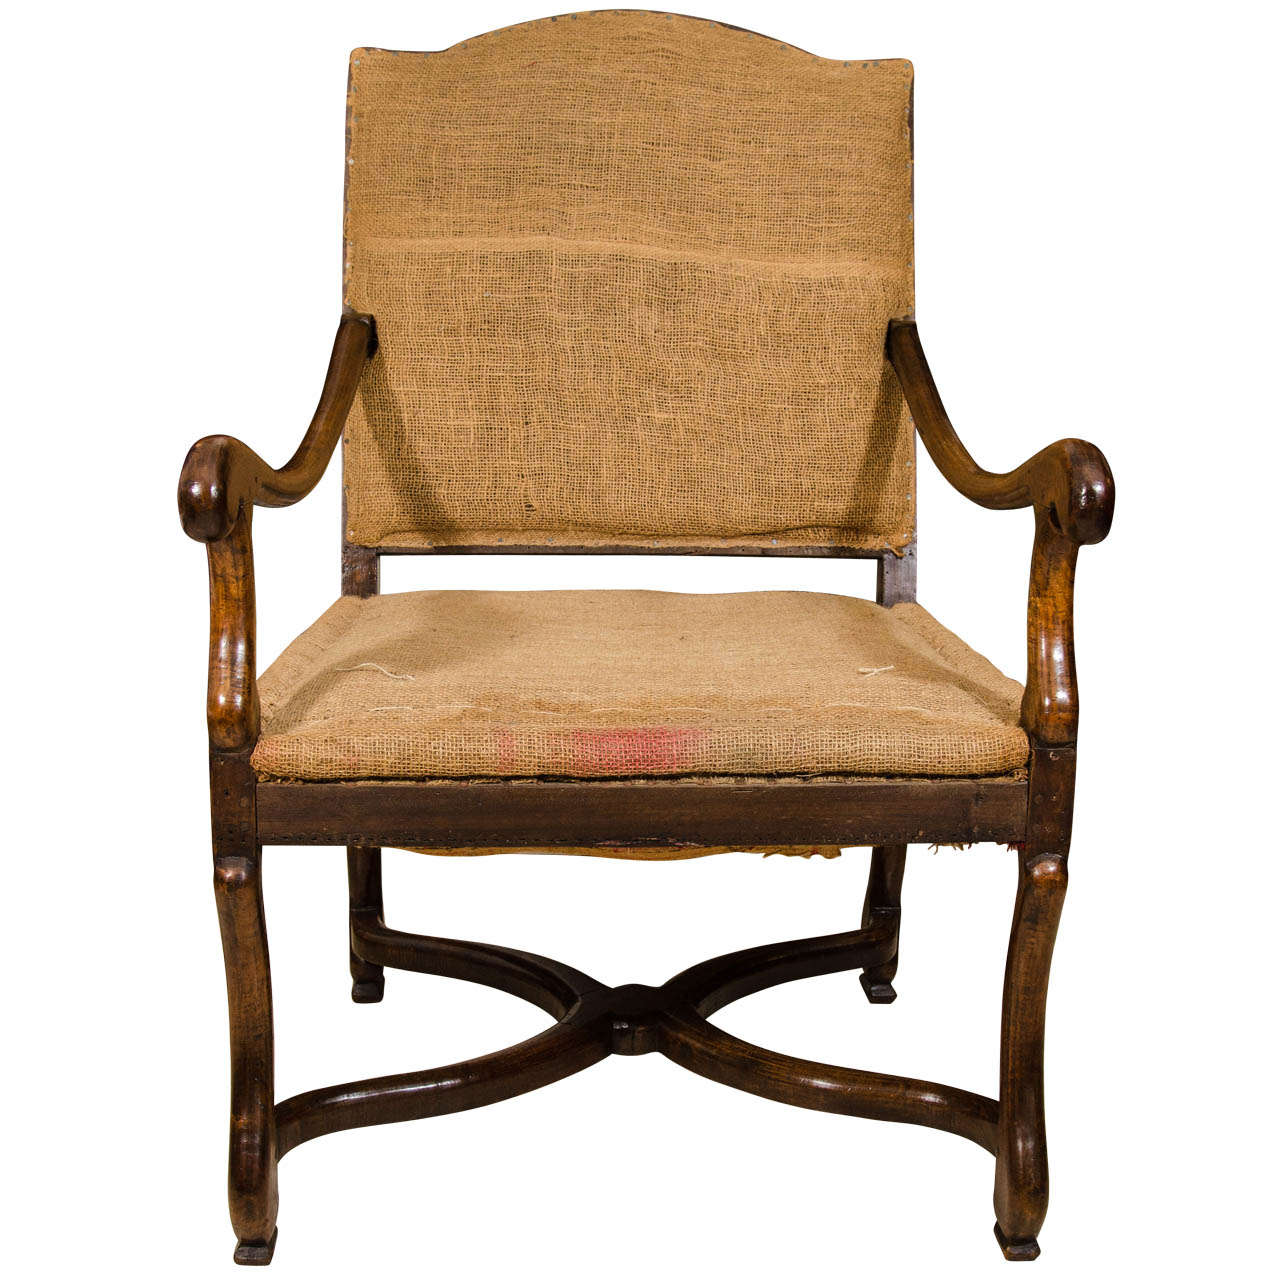 French 18th Century Os de Mouton Arm Chair